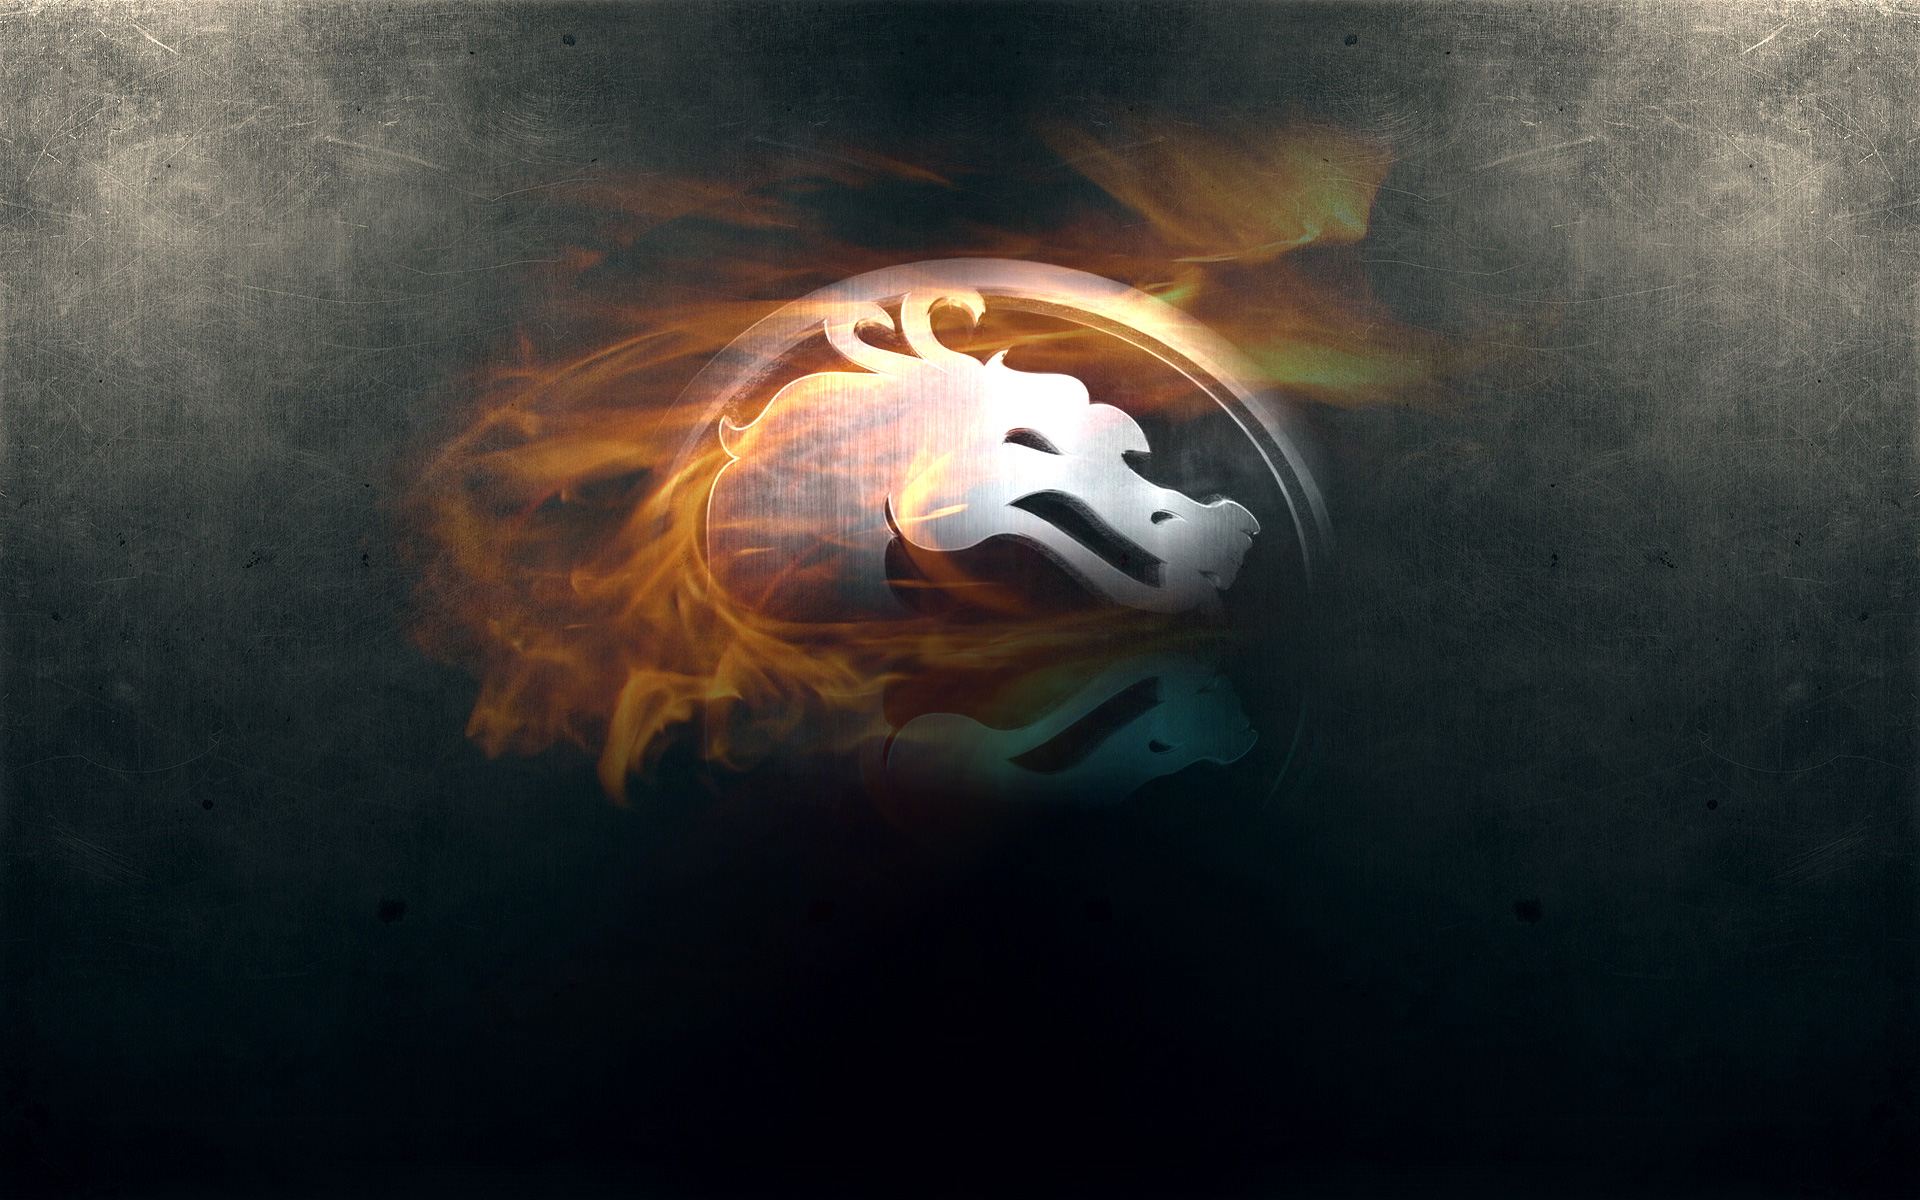 Official “Mortal Kombat X” Trailer Released